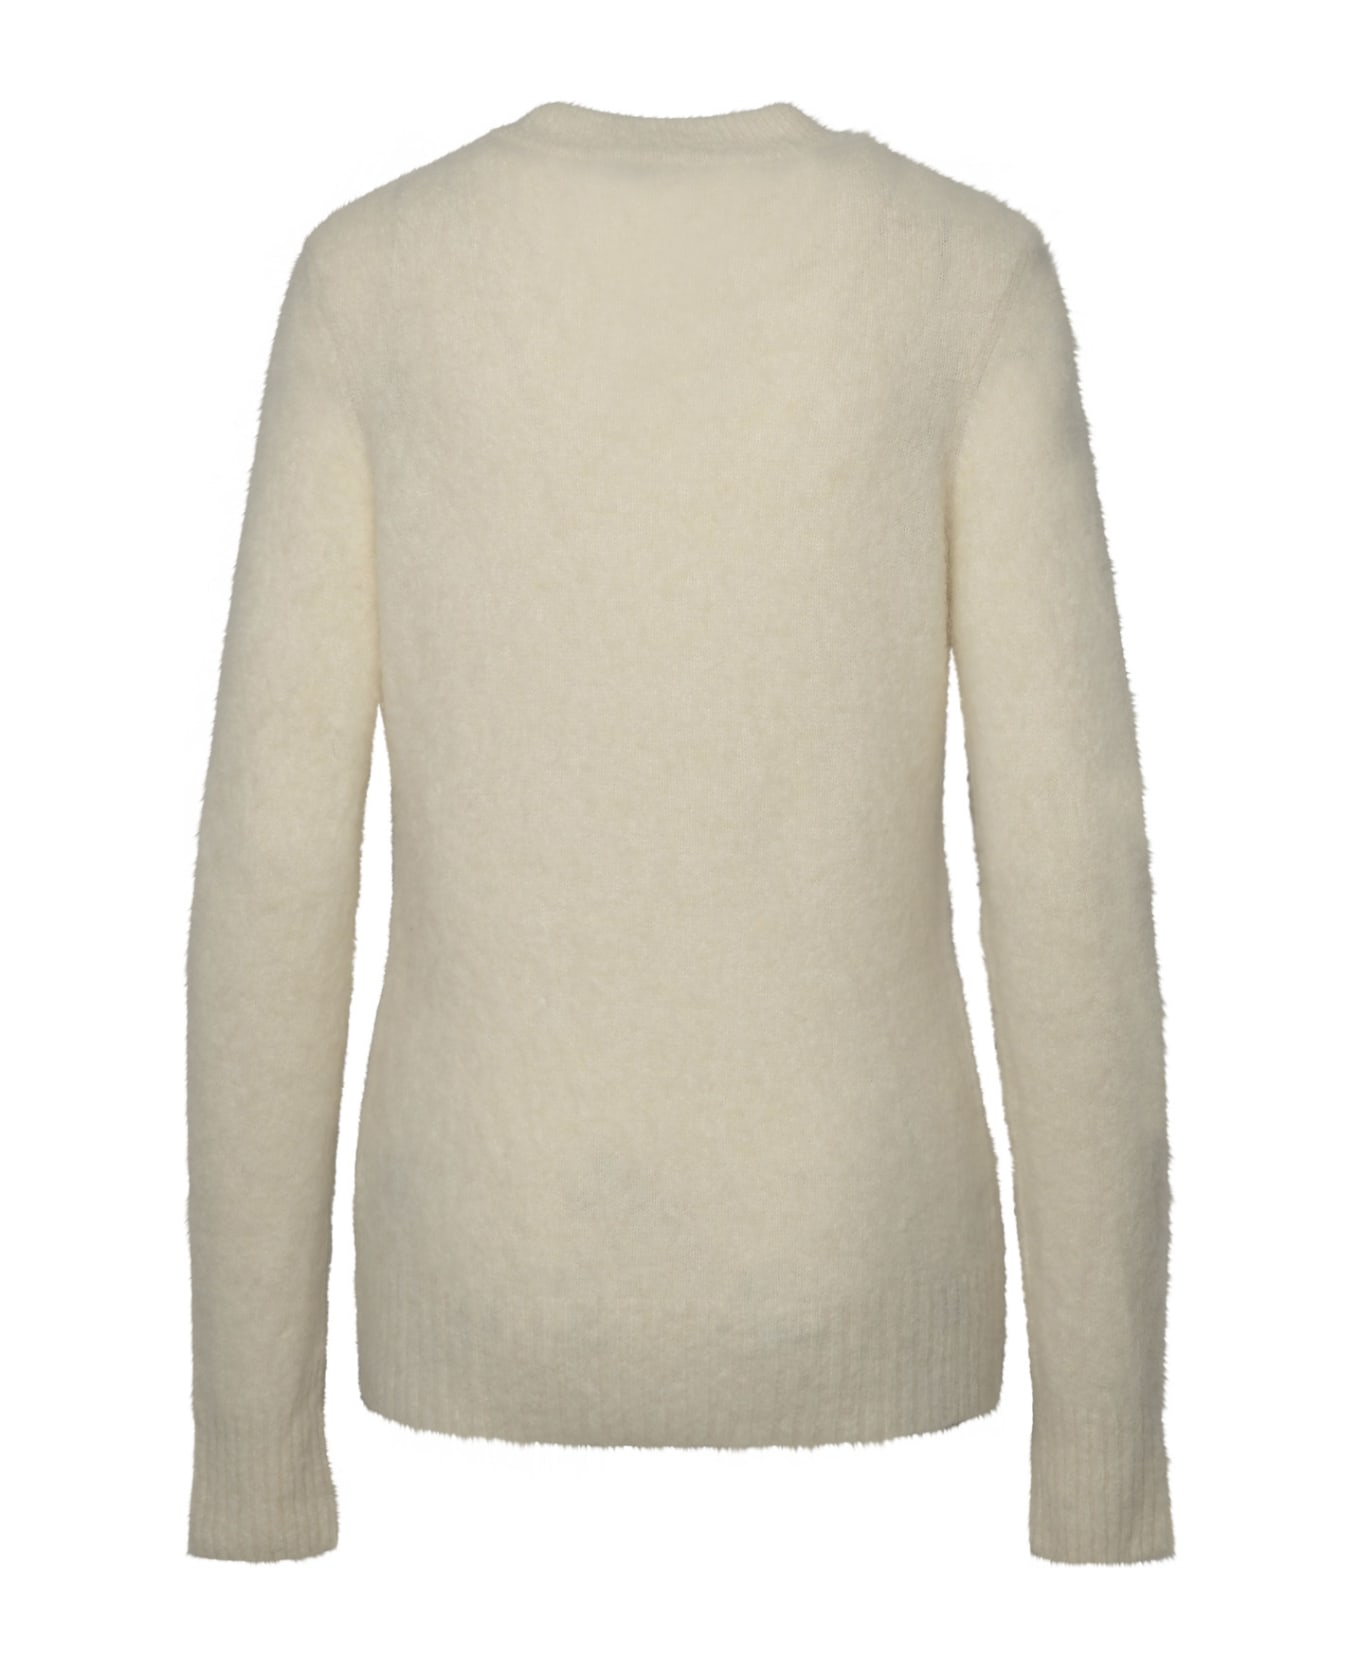 Ganni Ivory Brushed Alpaca Sweater - Cream